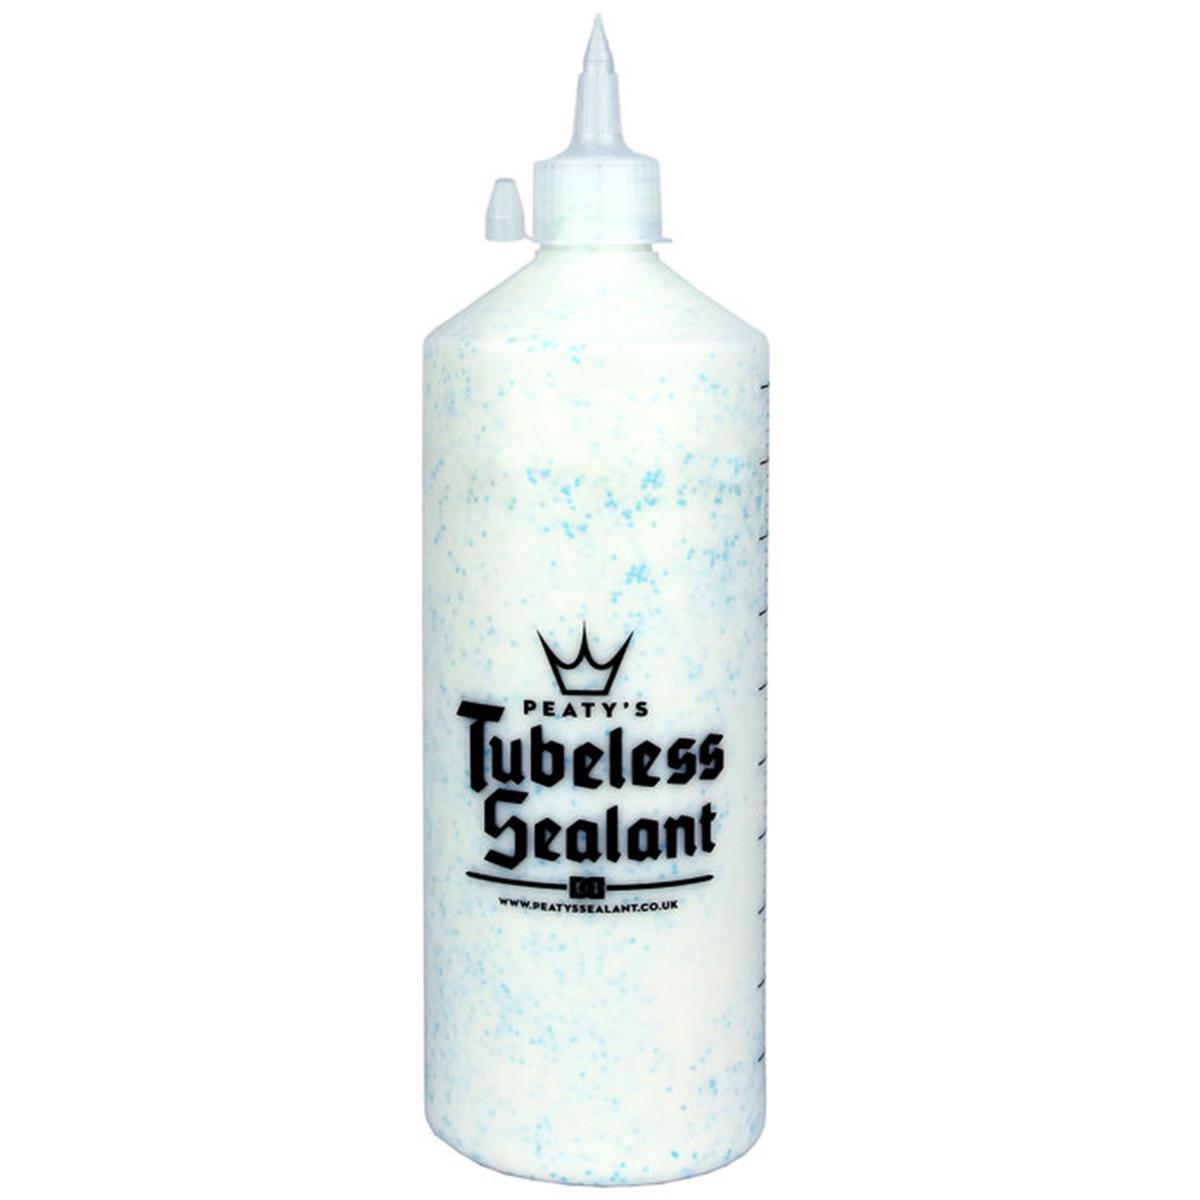 Peaty's Préventif Tubeless Tubeless Sealant Workshop Bottle